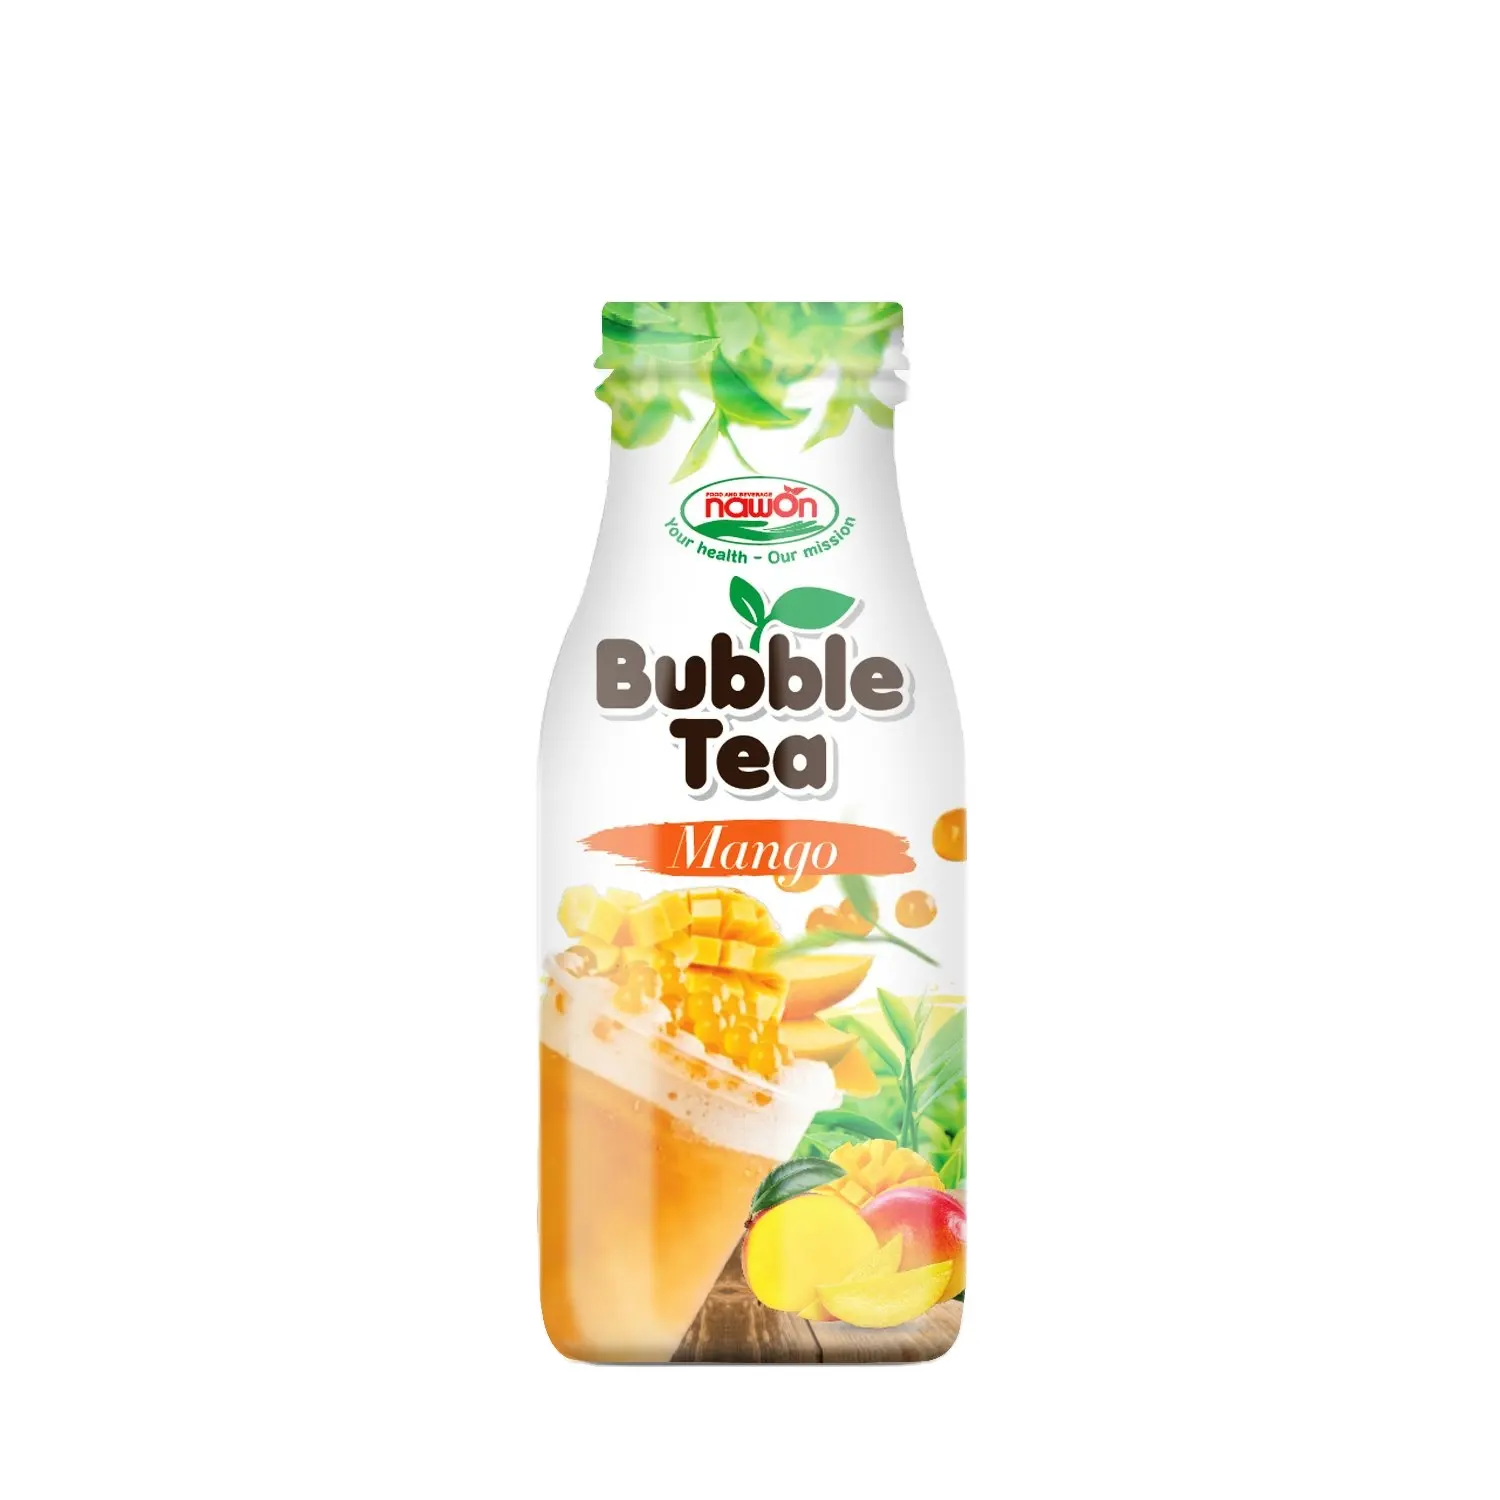 280ml 버블 티 망고 맛 Nawon 음료 도매 공급 업체 터지는 보바 최고의 가격 개인 라벨 음료 생산